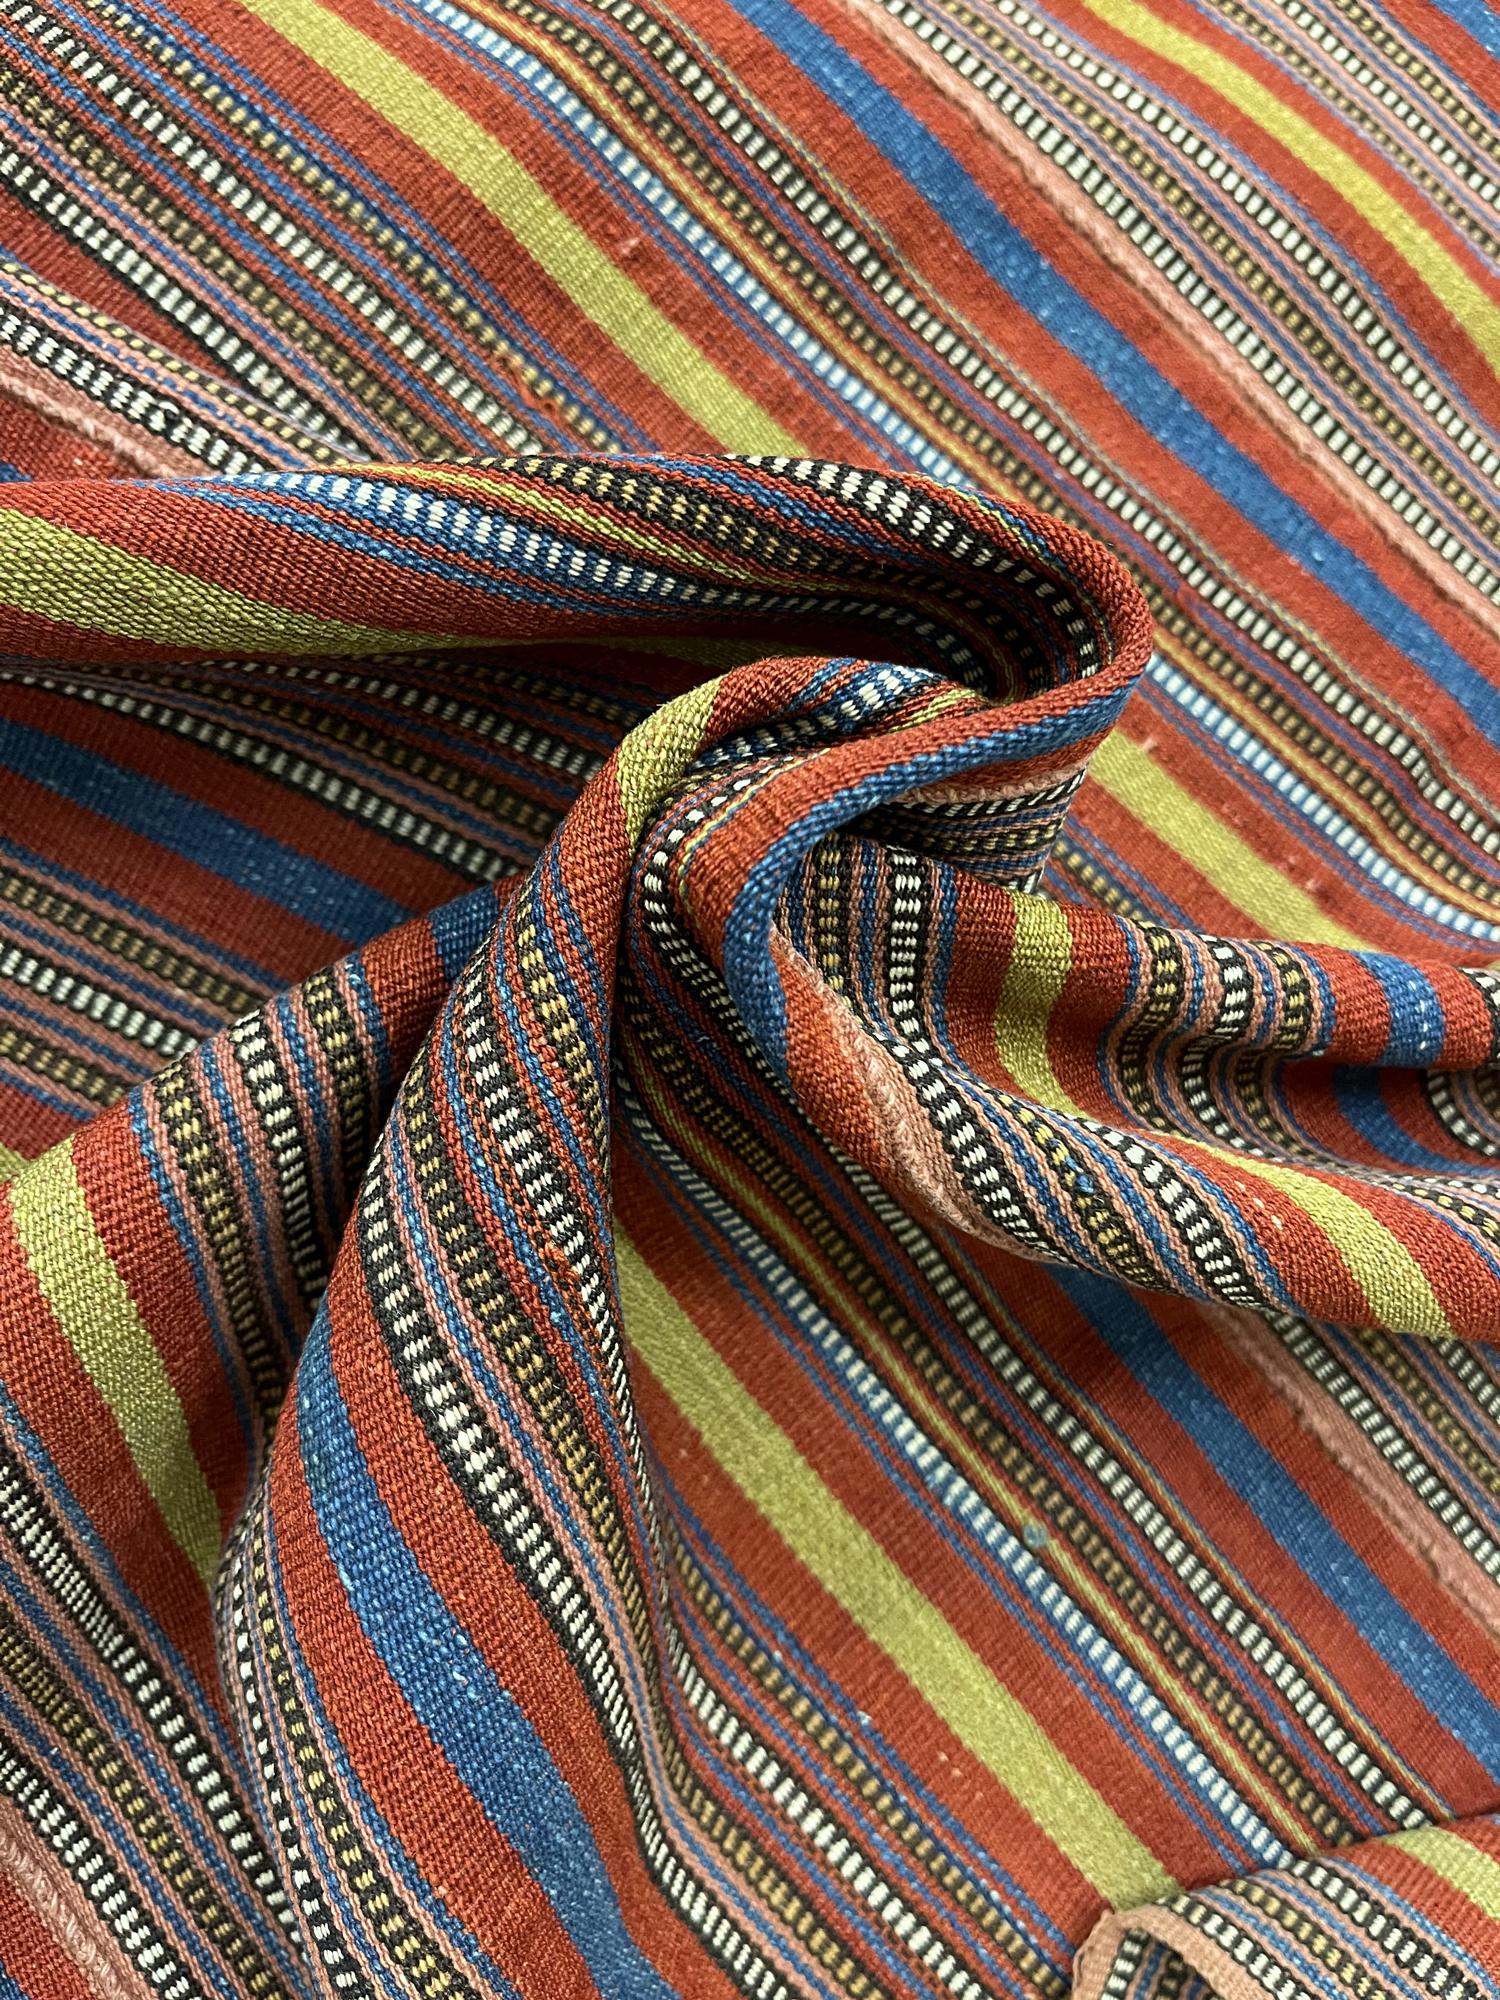 Late 19th Century Antique Rugs Textile, Traditional Striped Jajim Kilim Handwoven Kilim For Sale